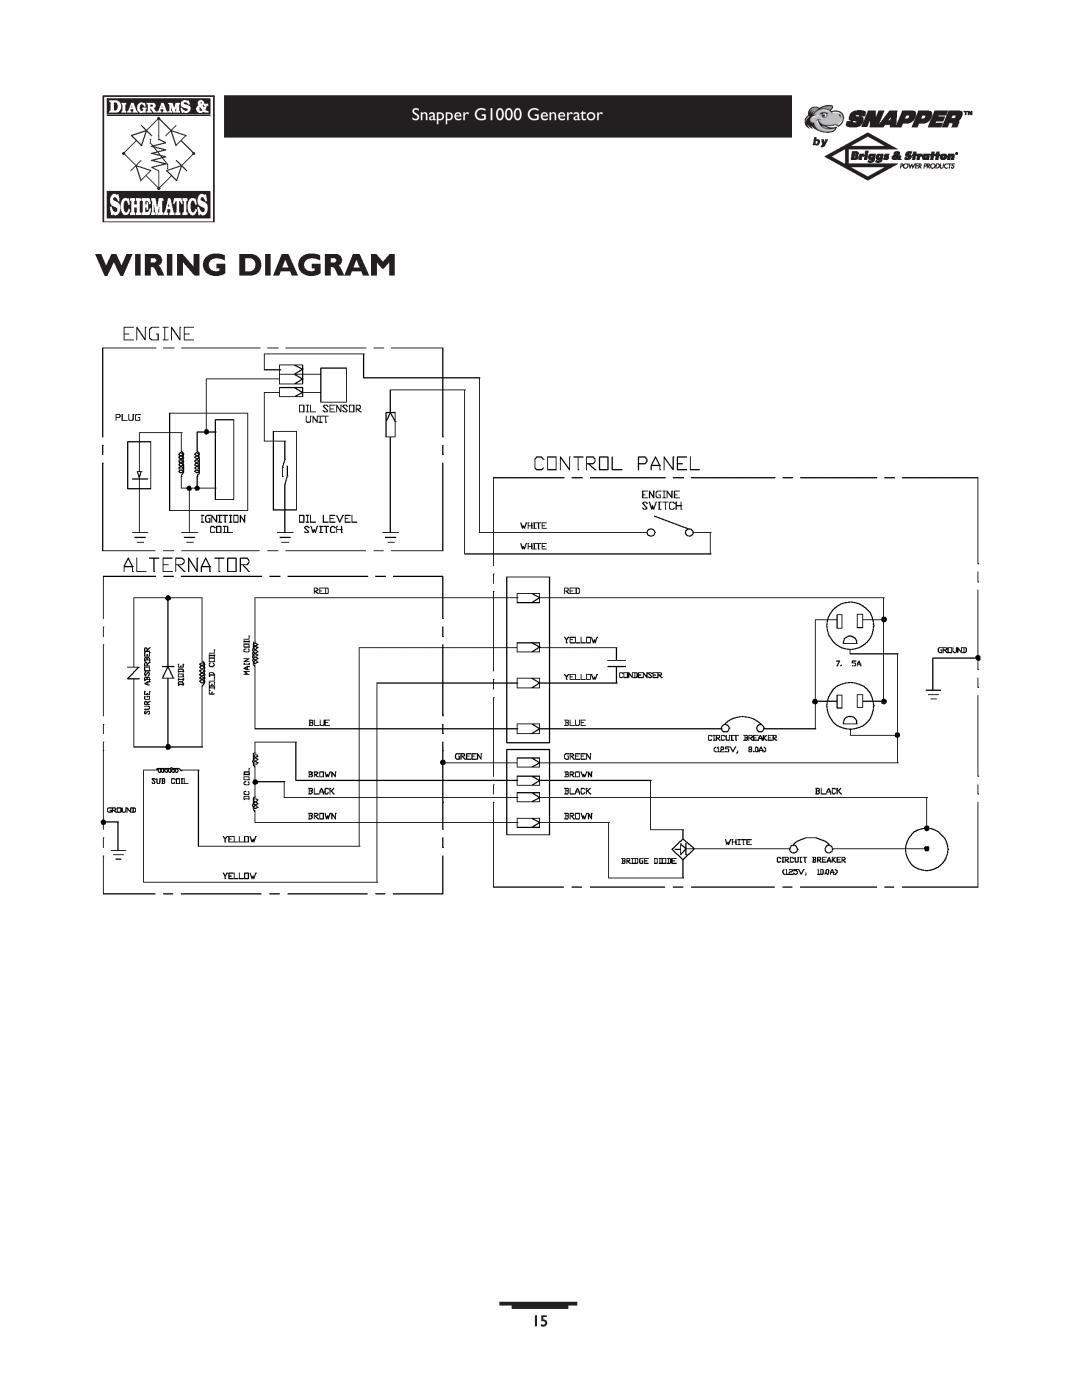 Snapper 1666-0 owner manual Wiring Diagram, Snapper G1000 Generator 